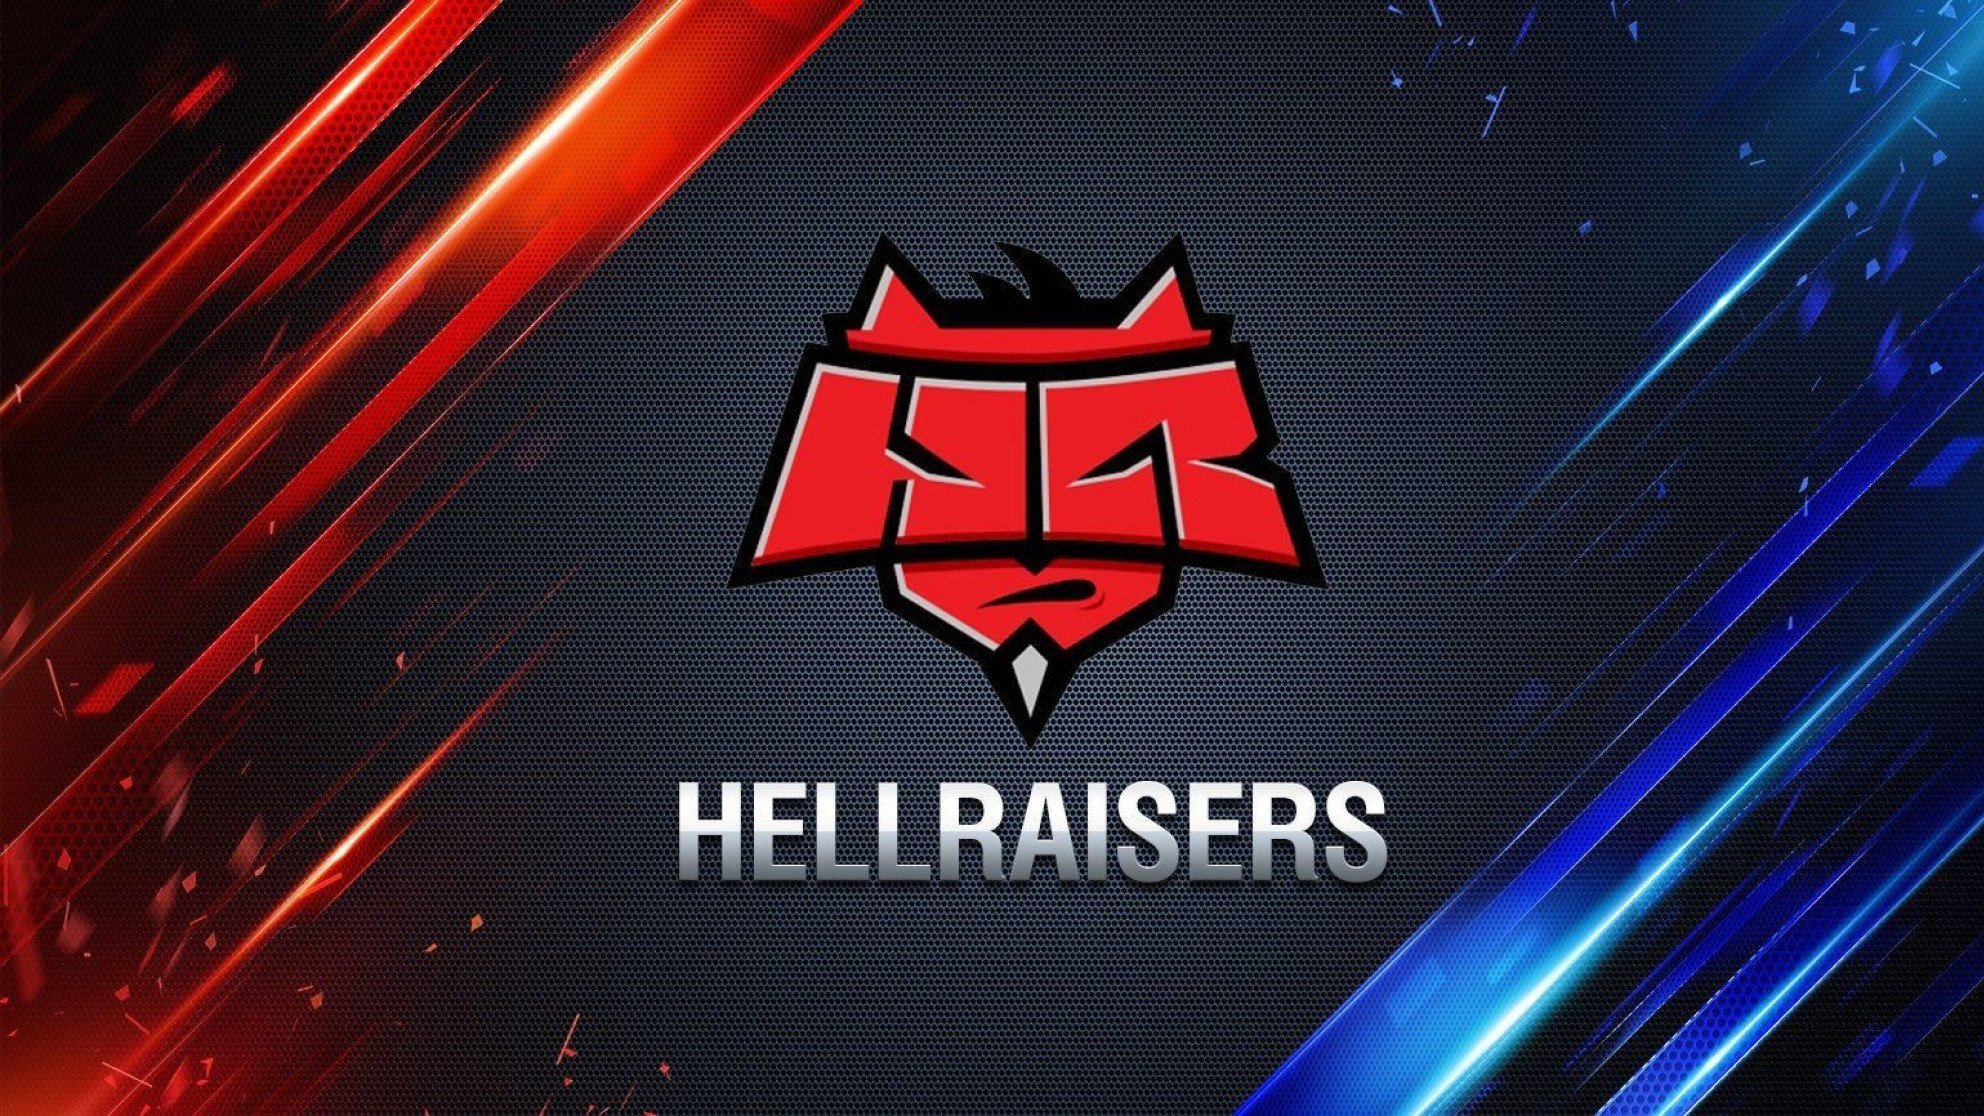 Хелл драйверс. Хелрейзерс КС го. Hell Raisers команда КС го. Логотип команды Hellraisers. Hellraiser киберспорт.